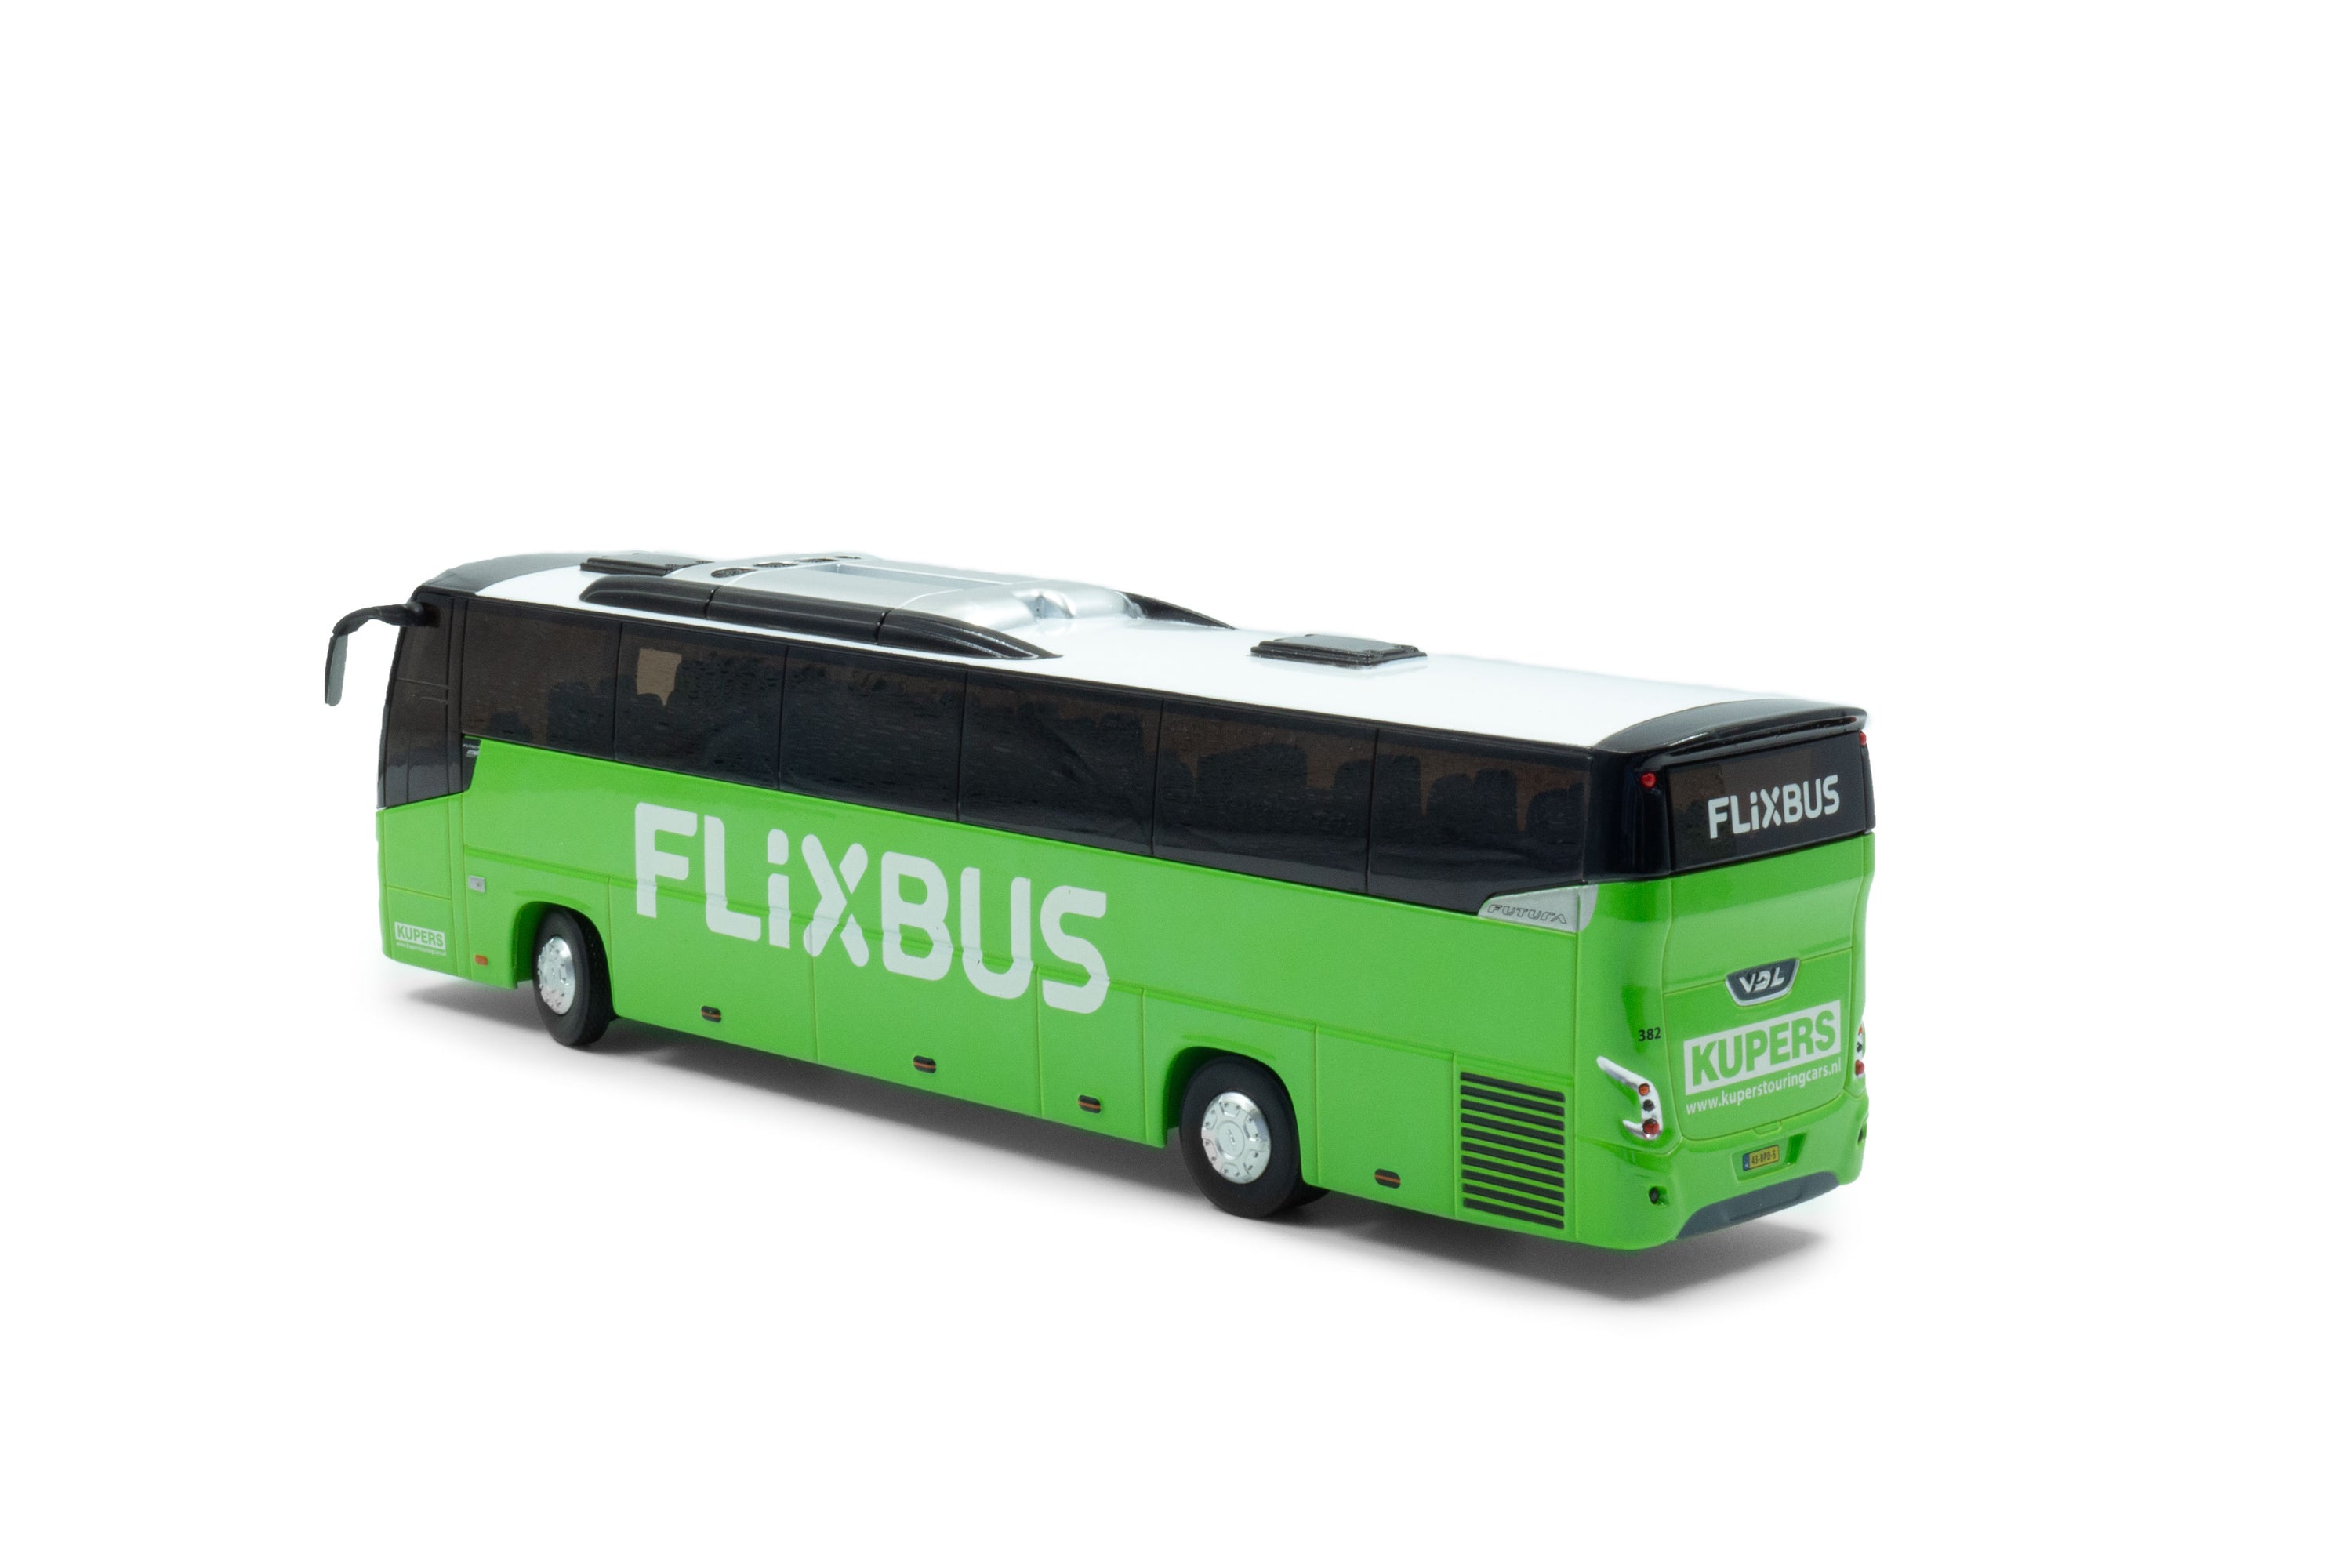 VDL Futura Flixbus Kupers